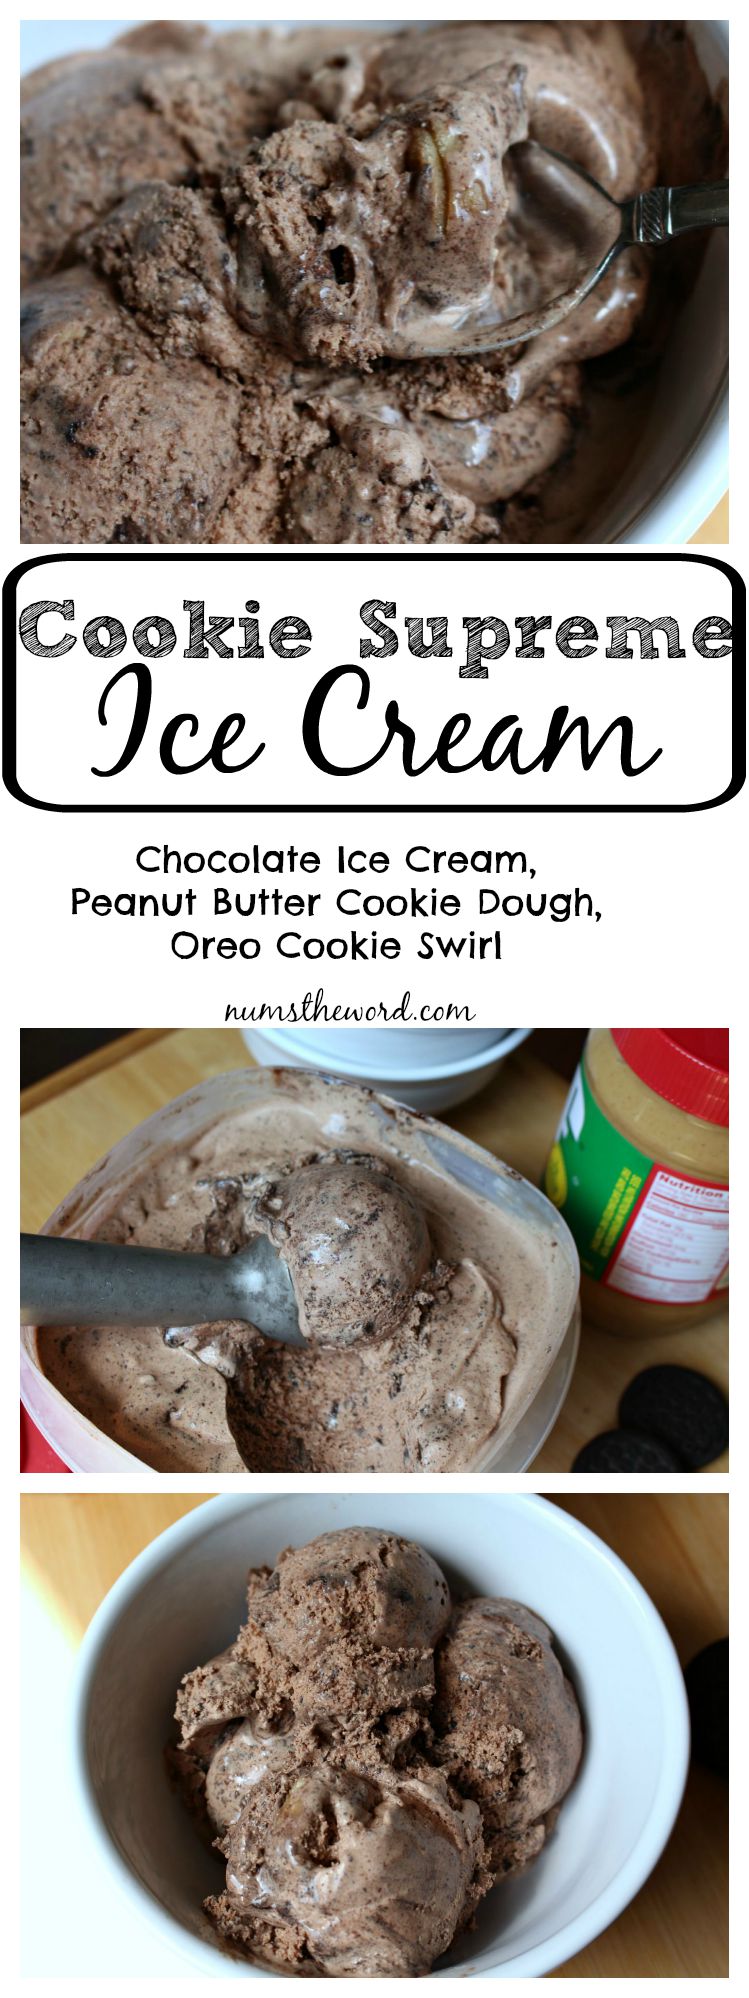 Cookie Supreme Ice Cream